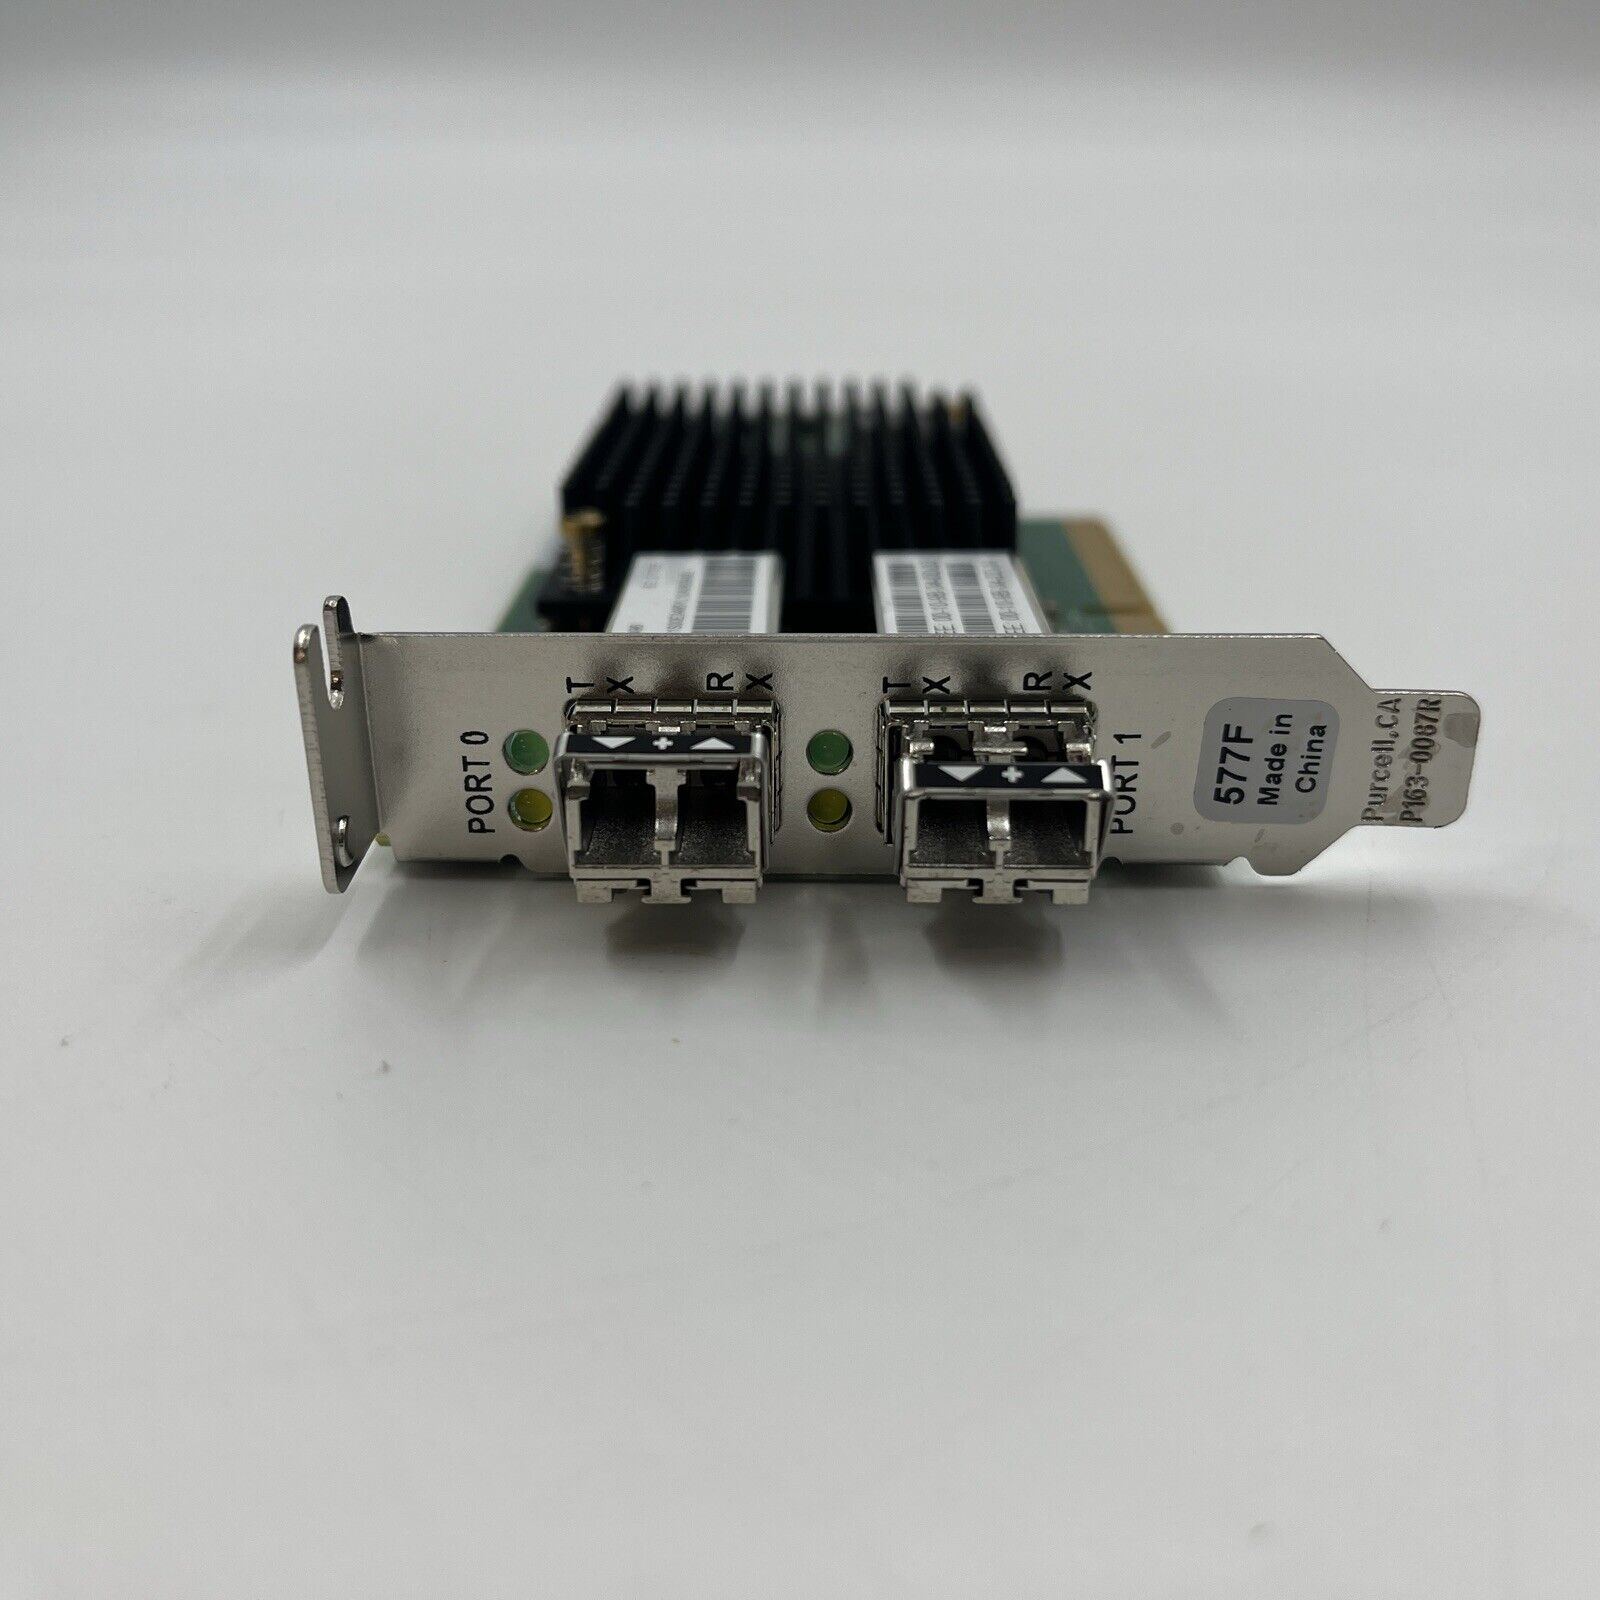 IBM Emulex FRU 00E3496 Dual Port 16Gb Fibre Channel Network Adapter, 00ND478